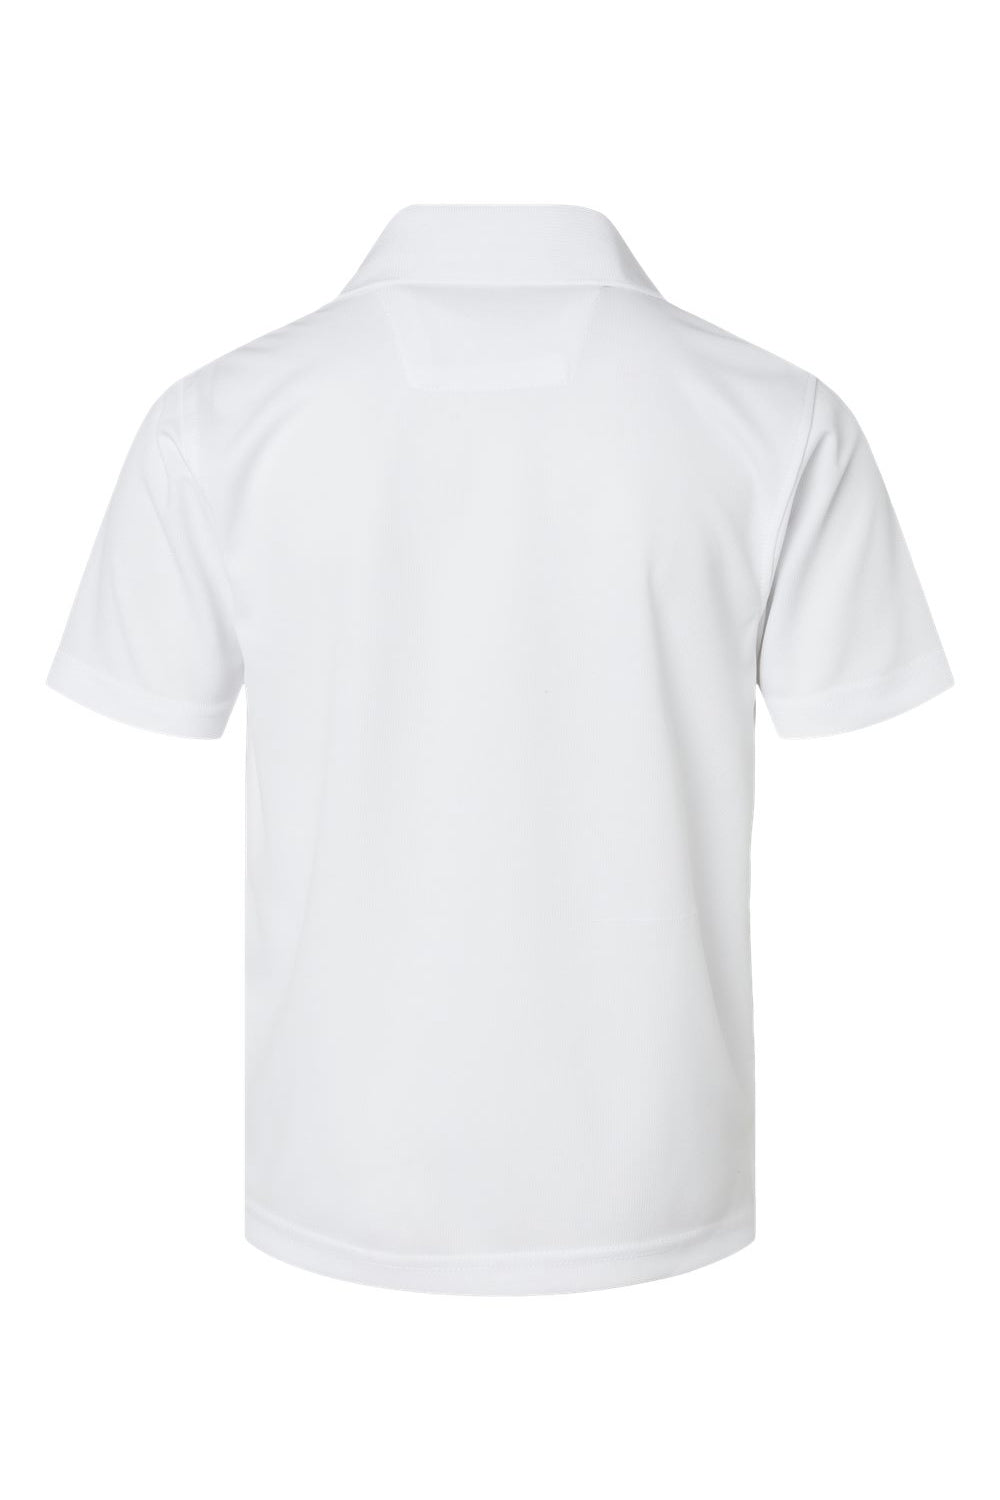 Paragon 108Y Youth Saratoga Performance Mini Mesh Short Sleeve Polo Shirt White Flat Back